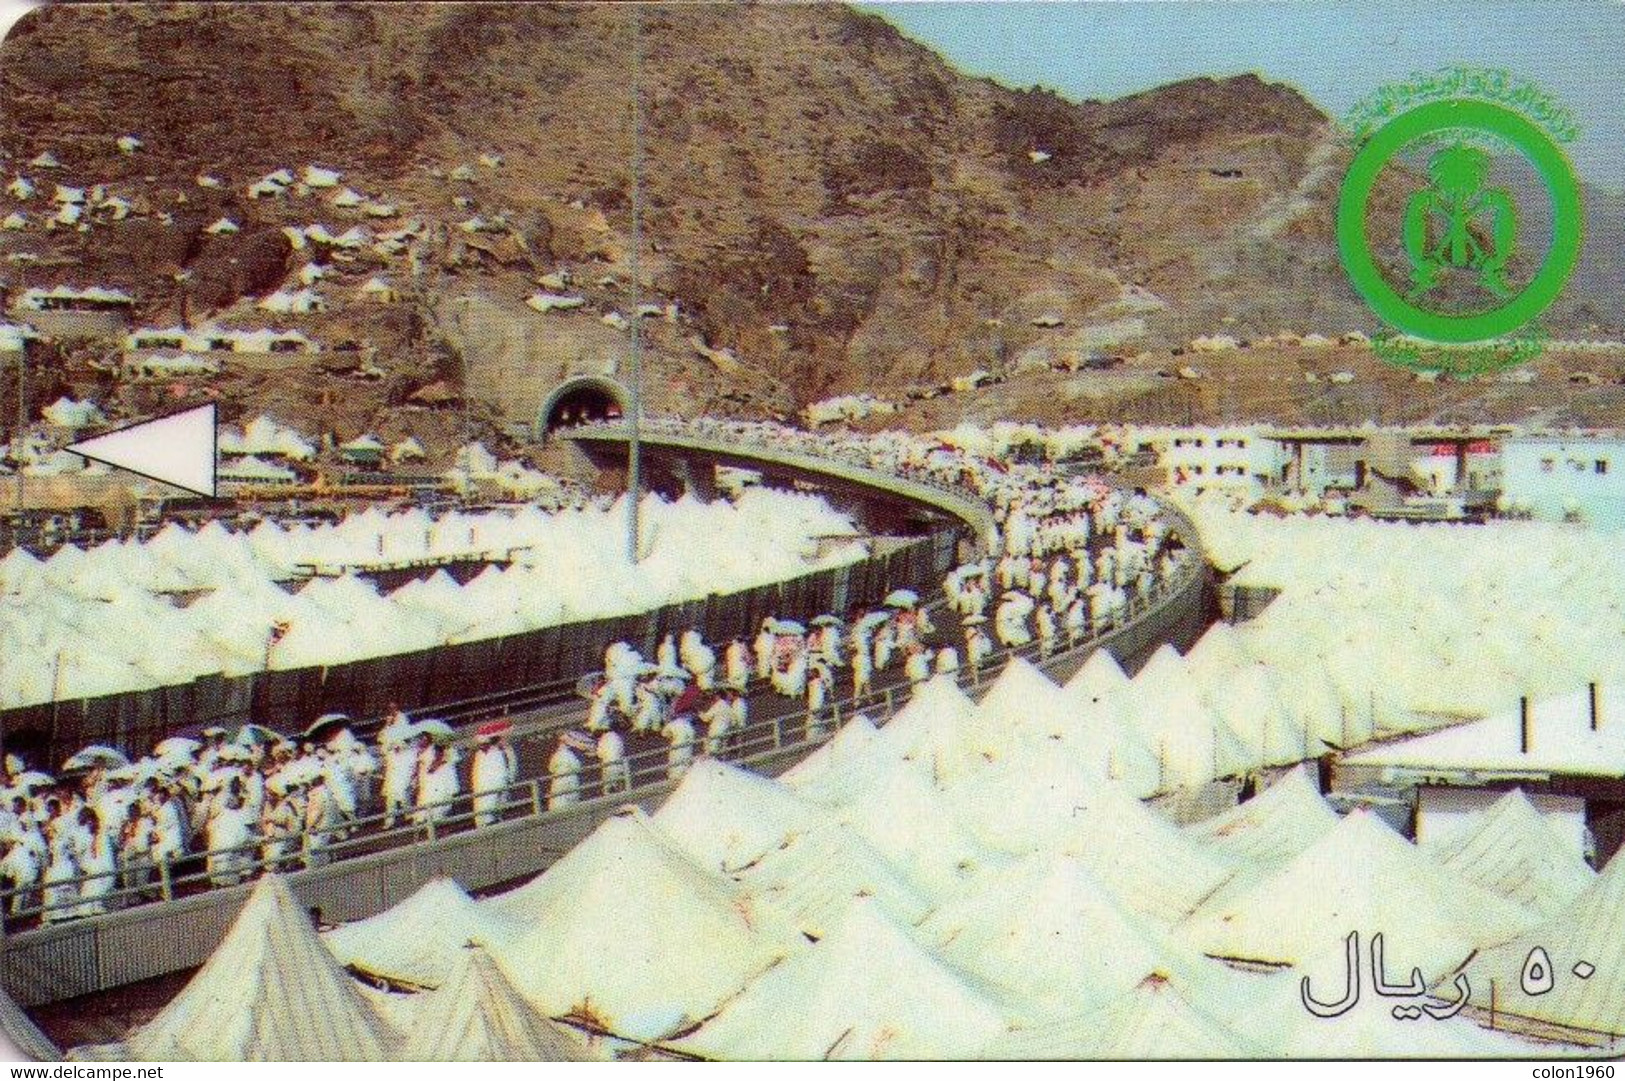 ARABIA SAUDITA. Mecca Tunnel Entrance "SAUDE". 1993. SA-STC-0003 (SAUDE). (008) - Saudi Arabia